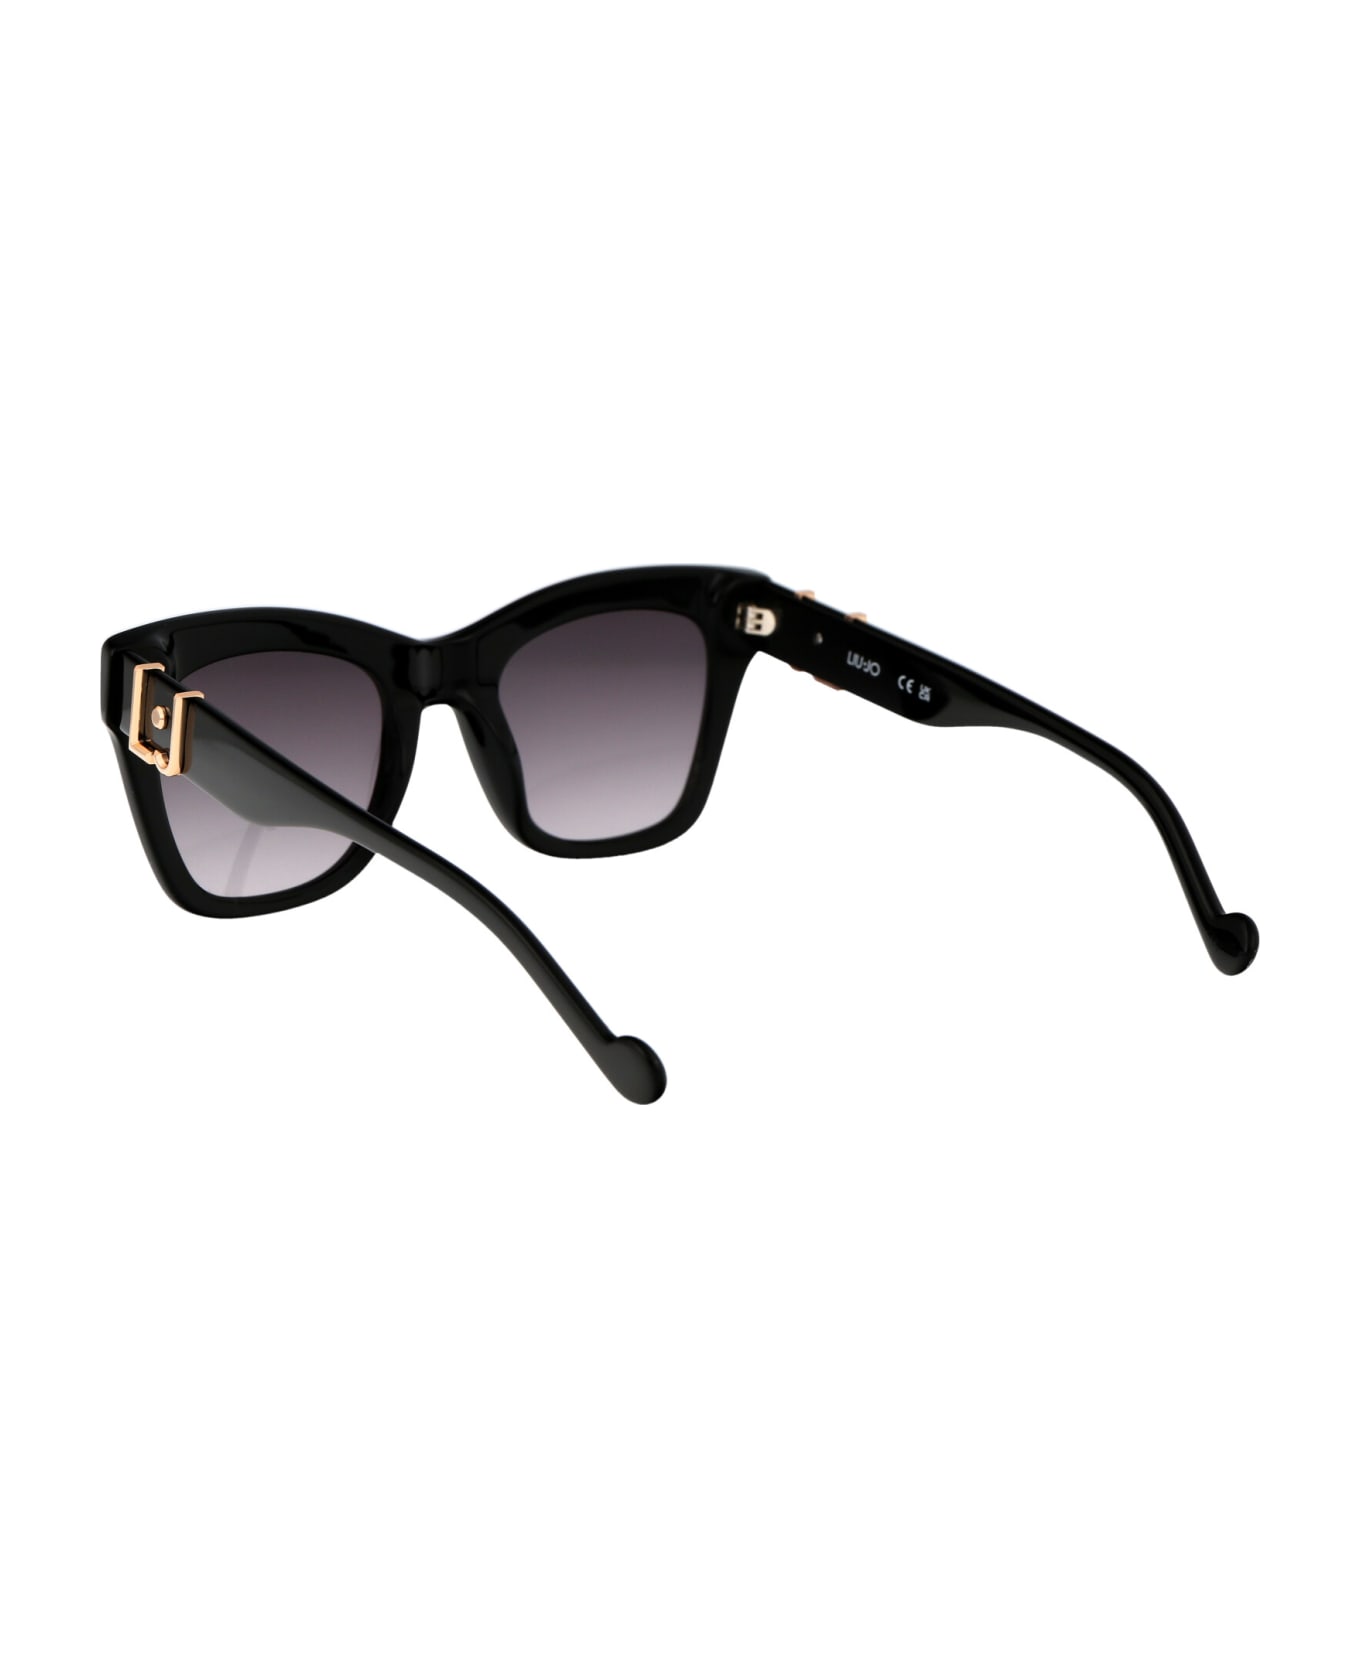 Liu-Jo Lj746s Sunglasses - 001 BLACK